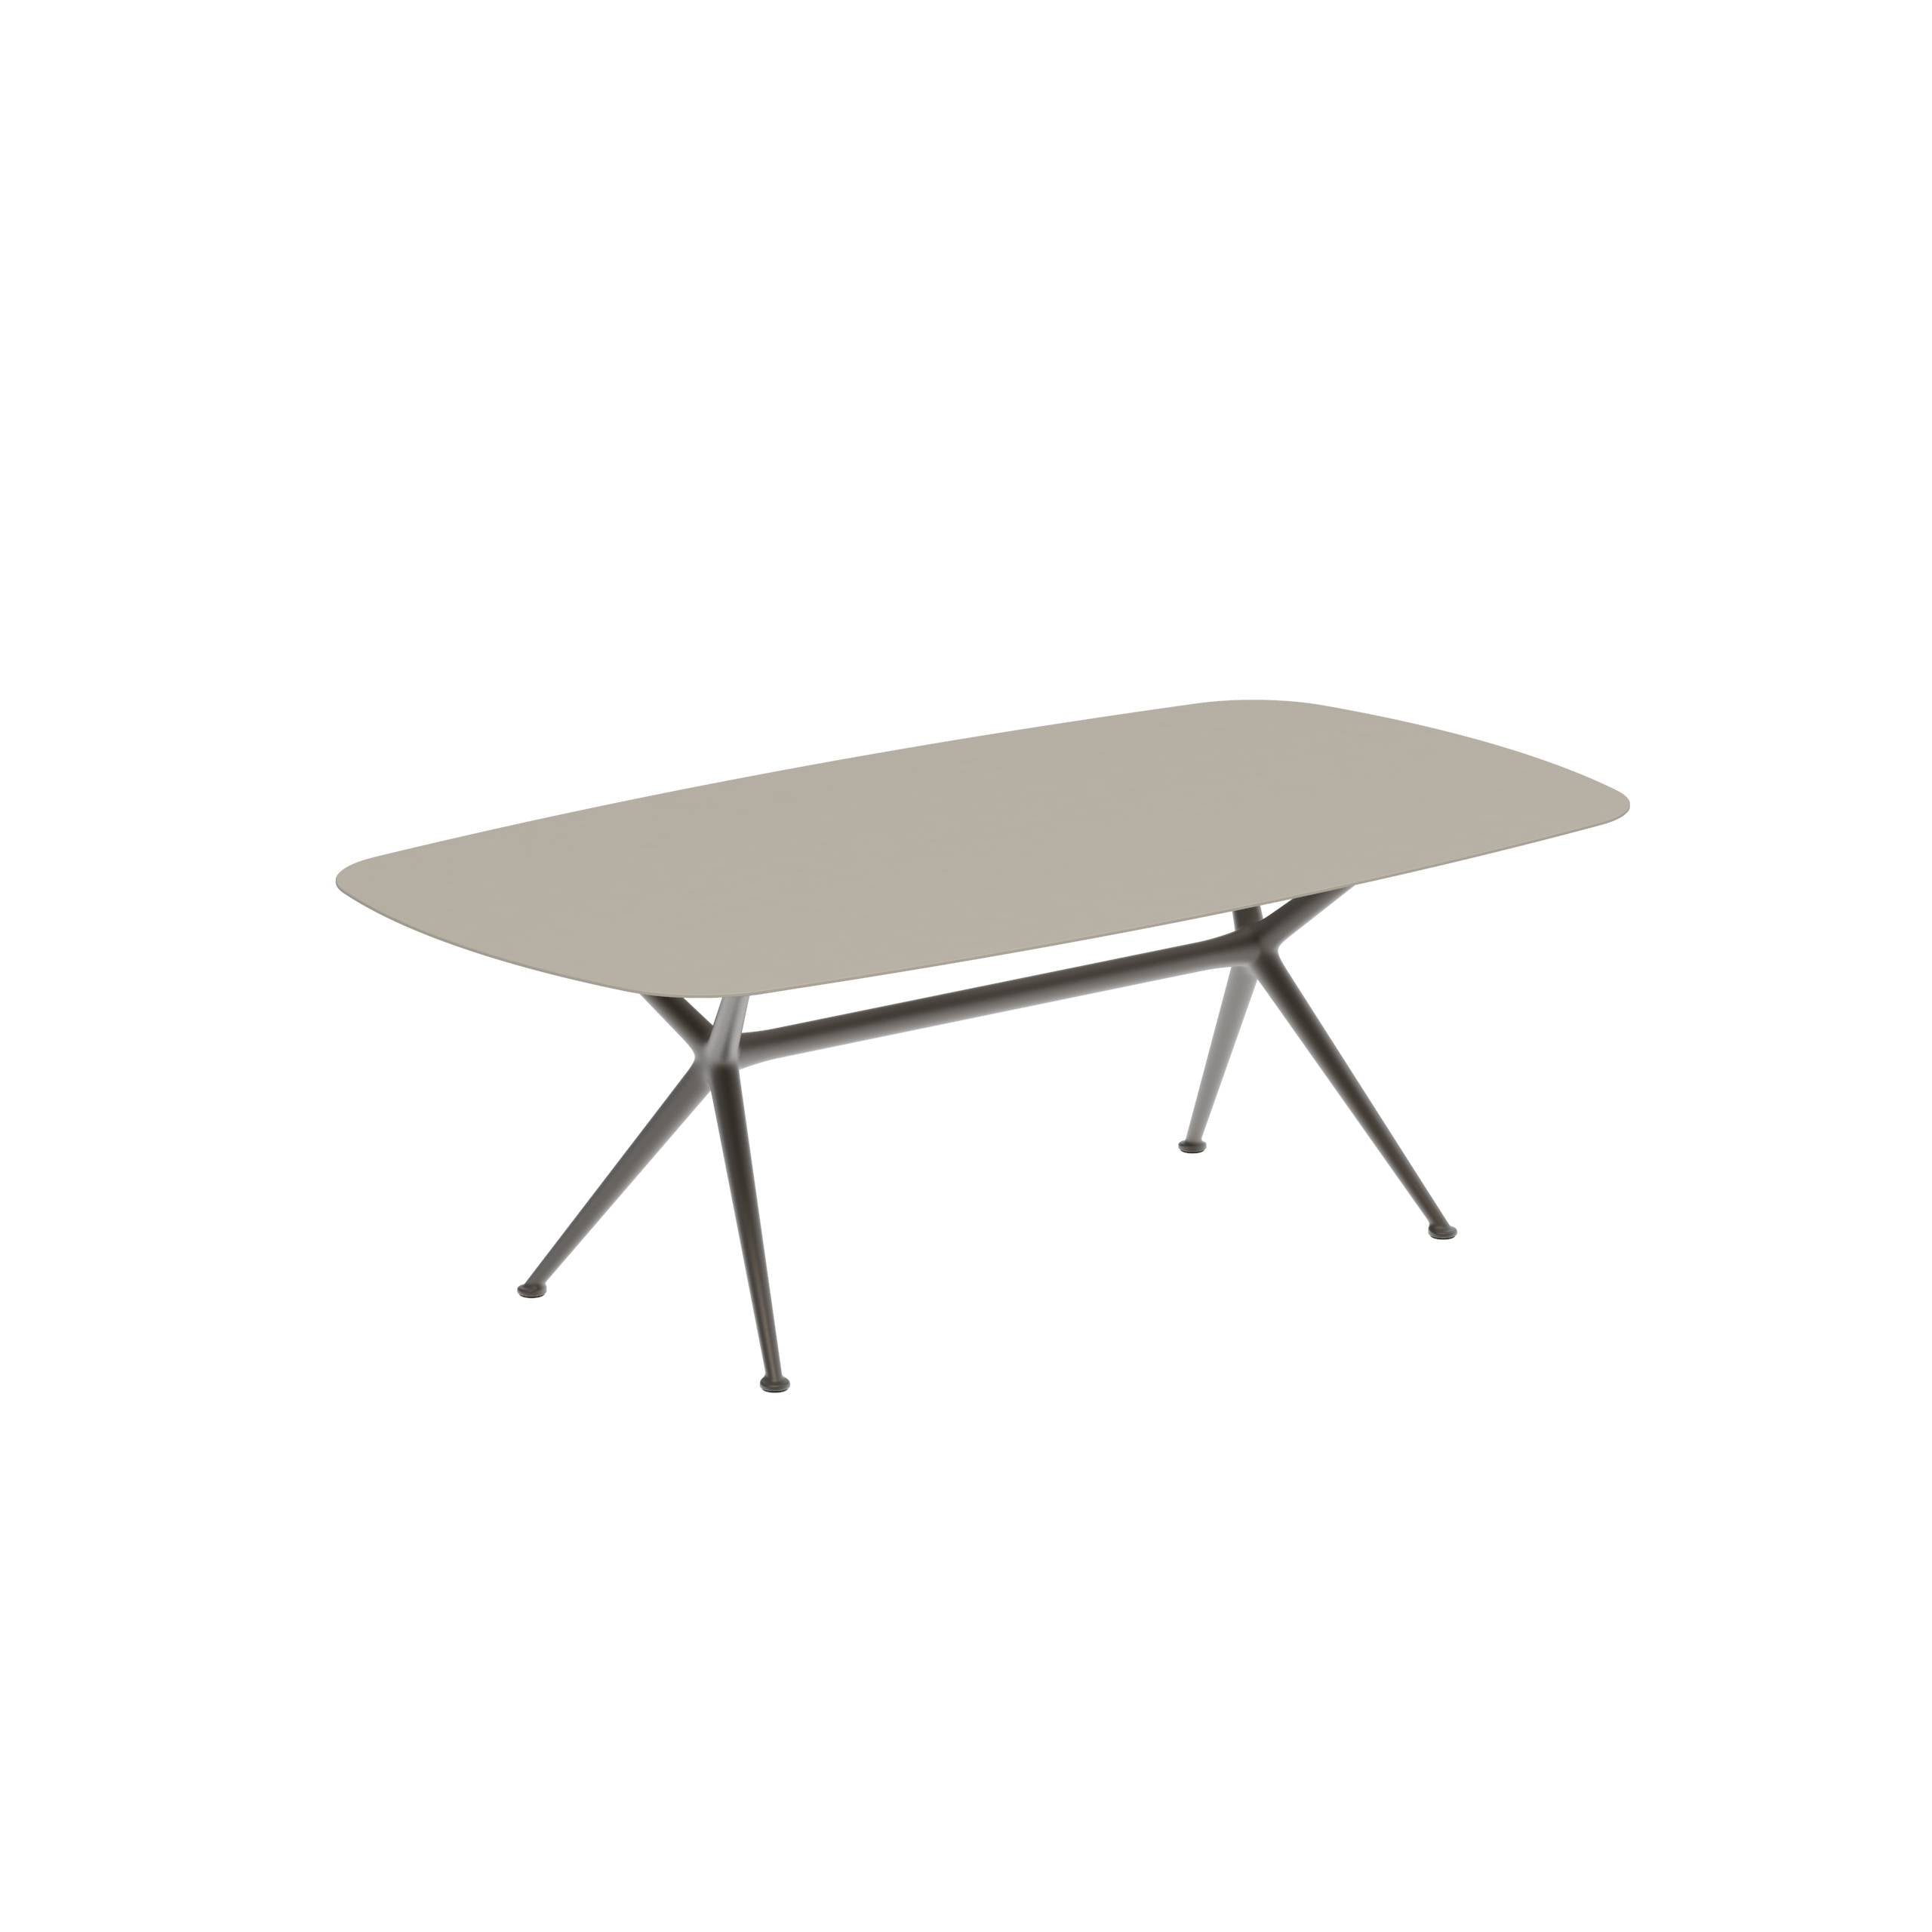 Exes Table 220x120cm Alu Legs Bronze - Table Top Ceramic Pearl Grey